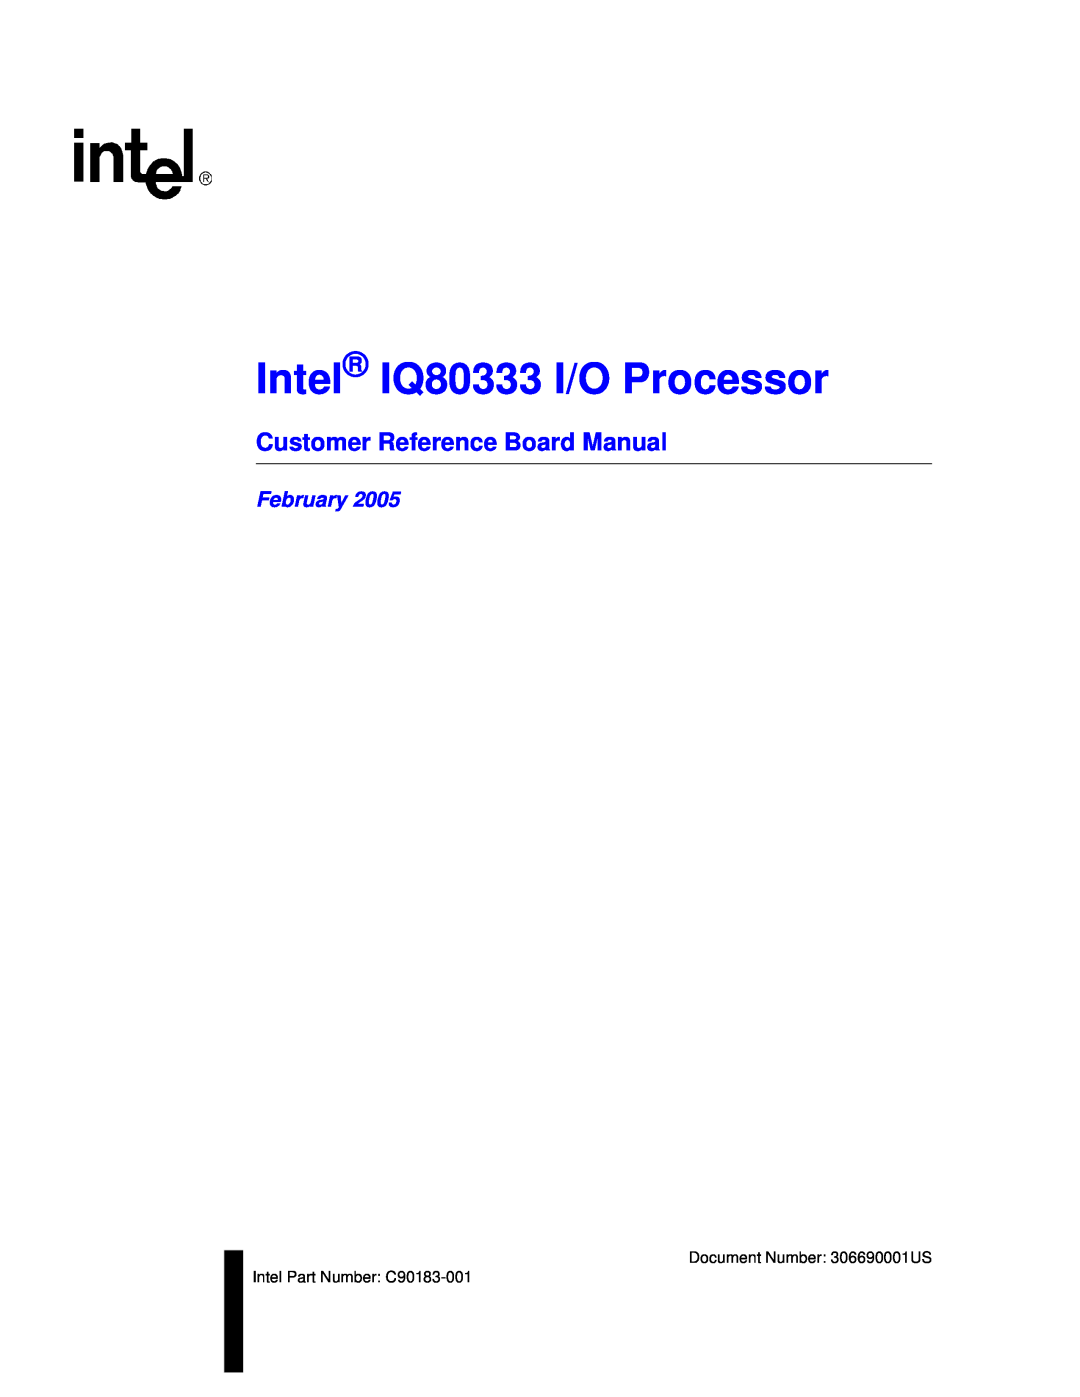 Intel manual Customer Reference Board Manual, Intel IQ80333 I/O Processor, February 